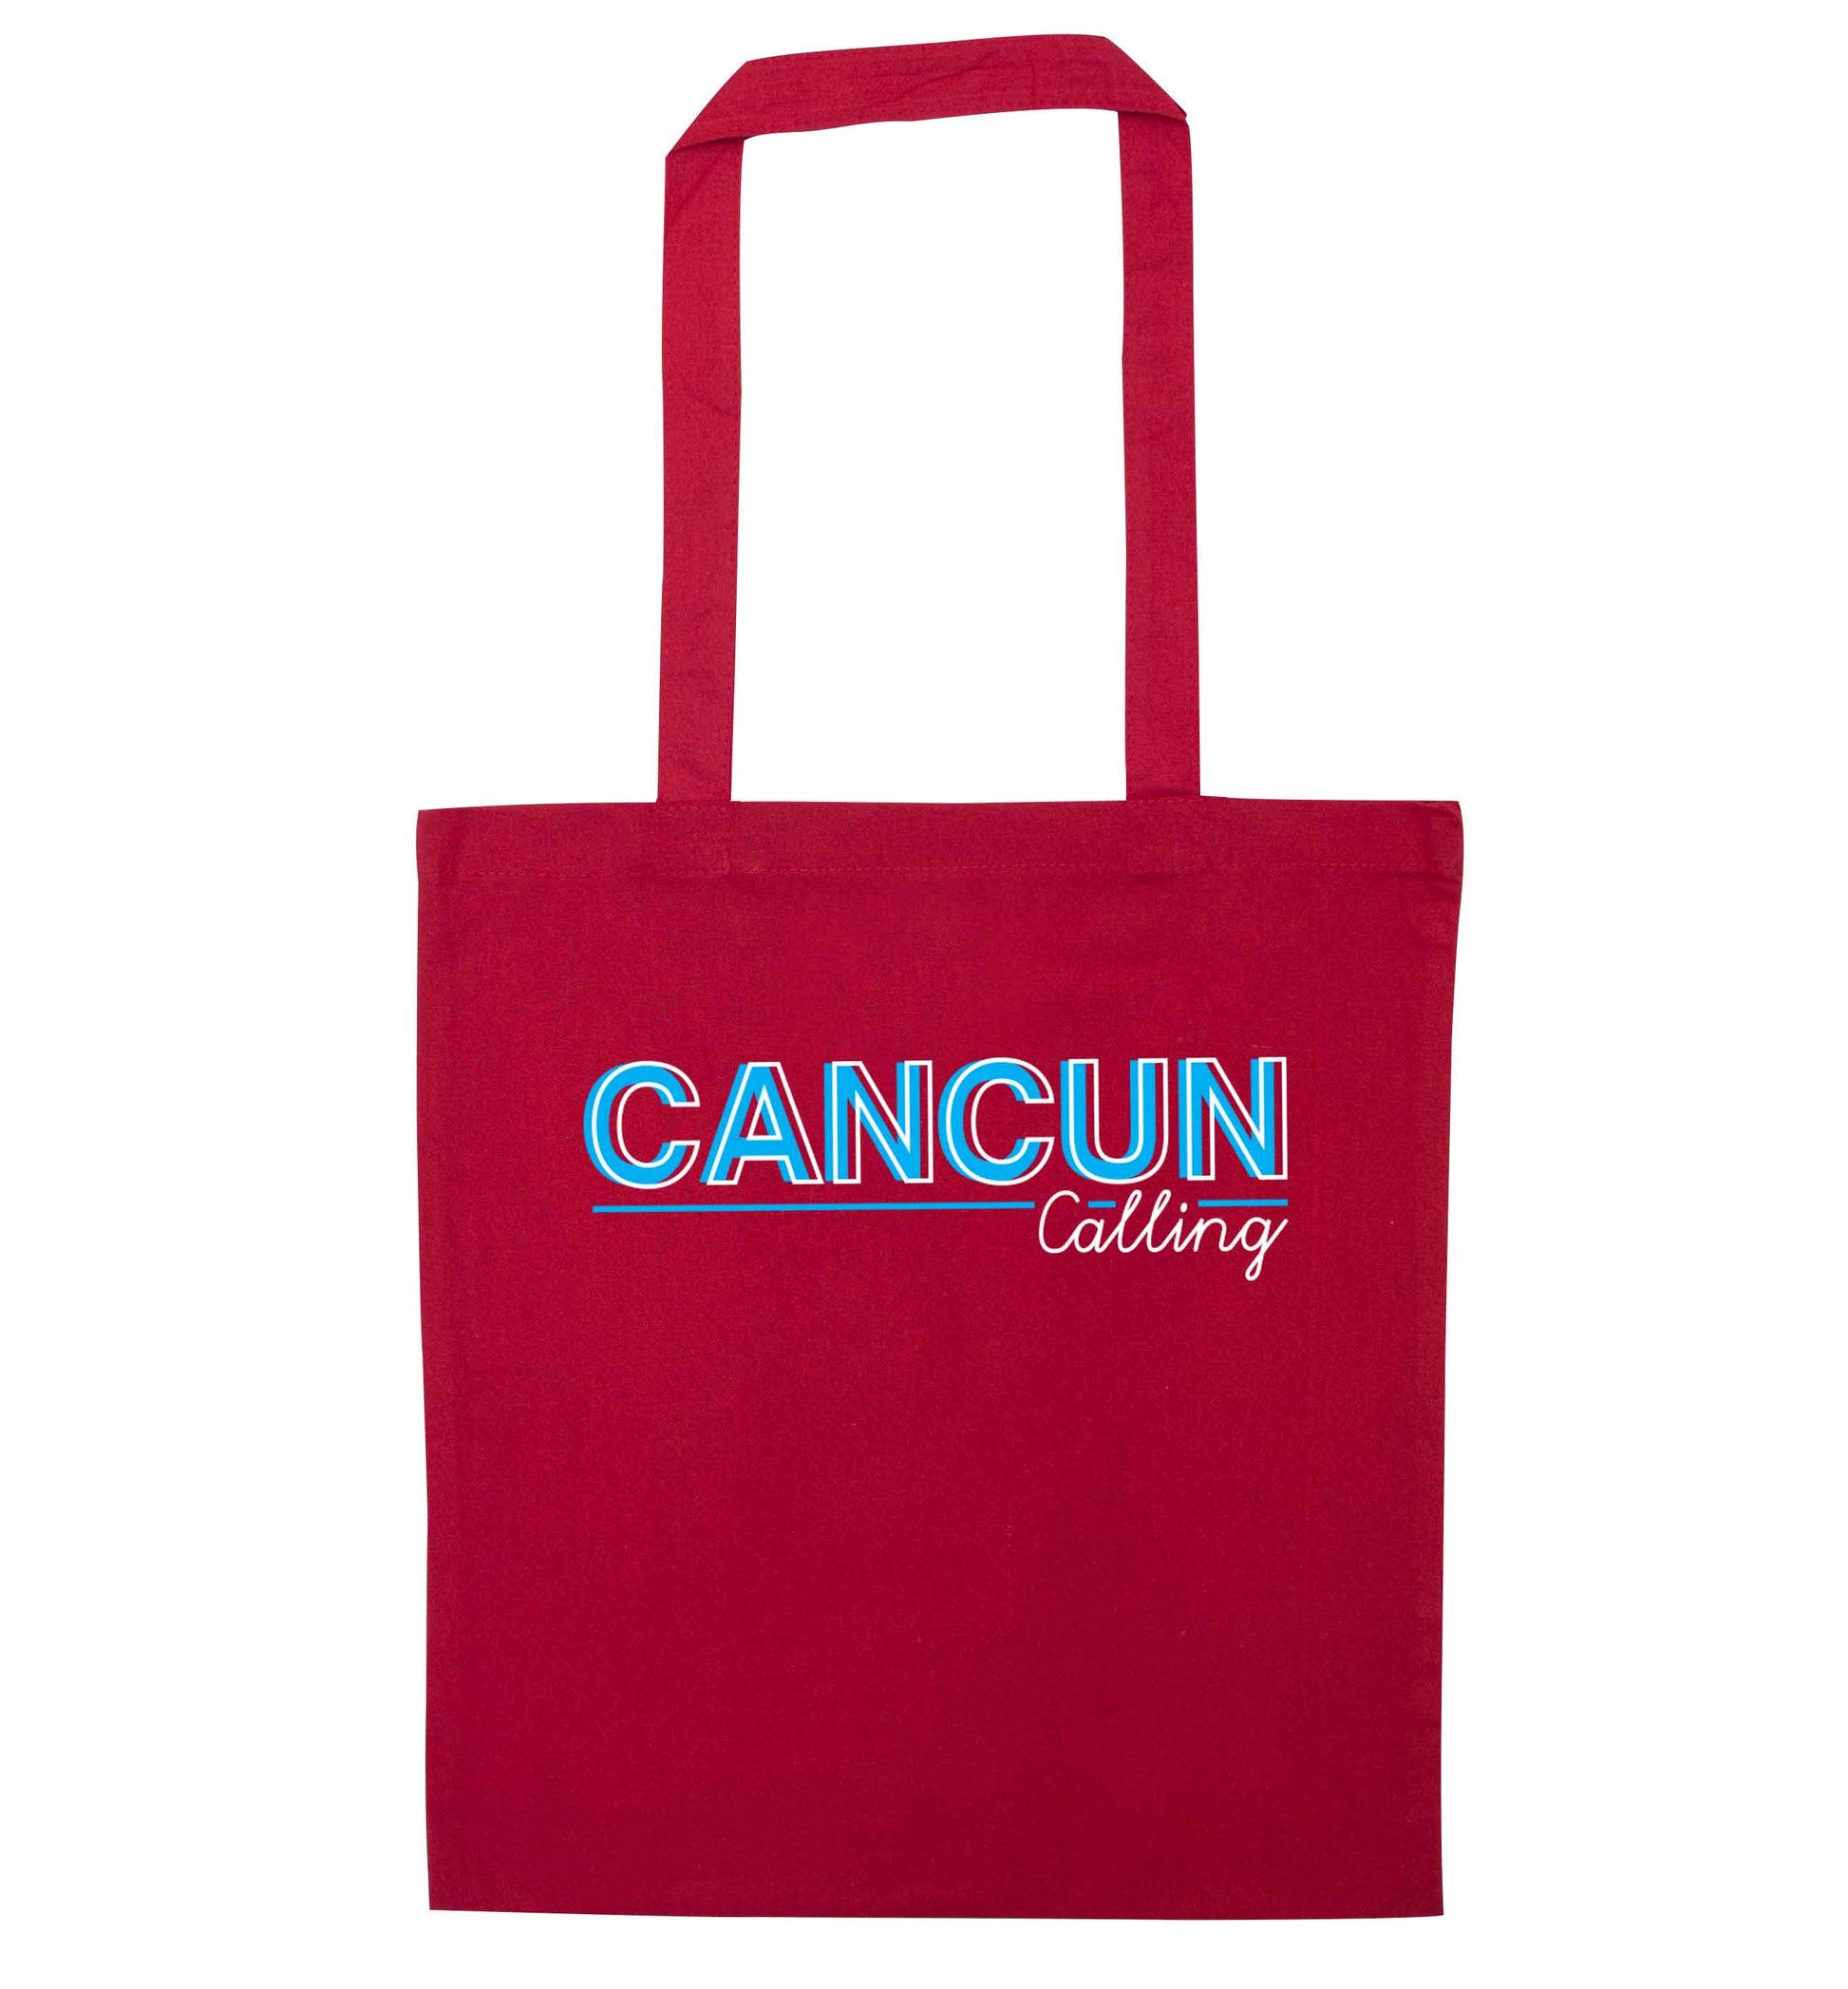 Cancun calling red tote bag